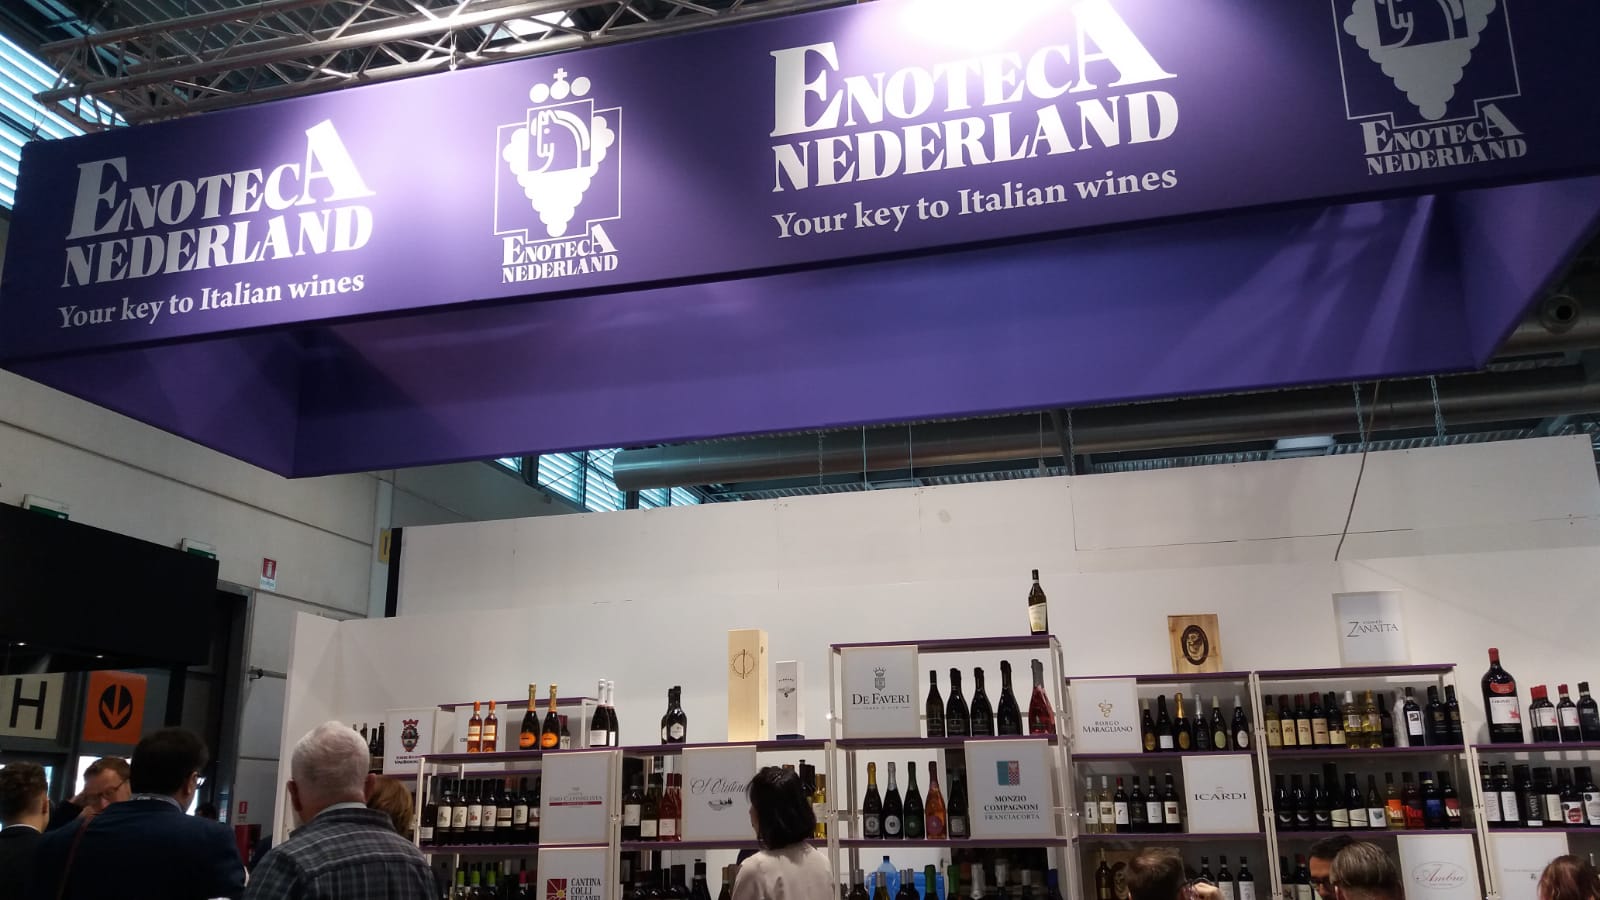 Booth Enoteca Nederland at Vinitaly